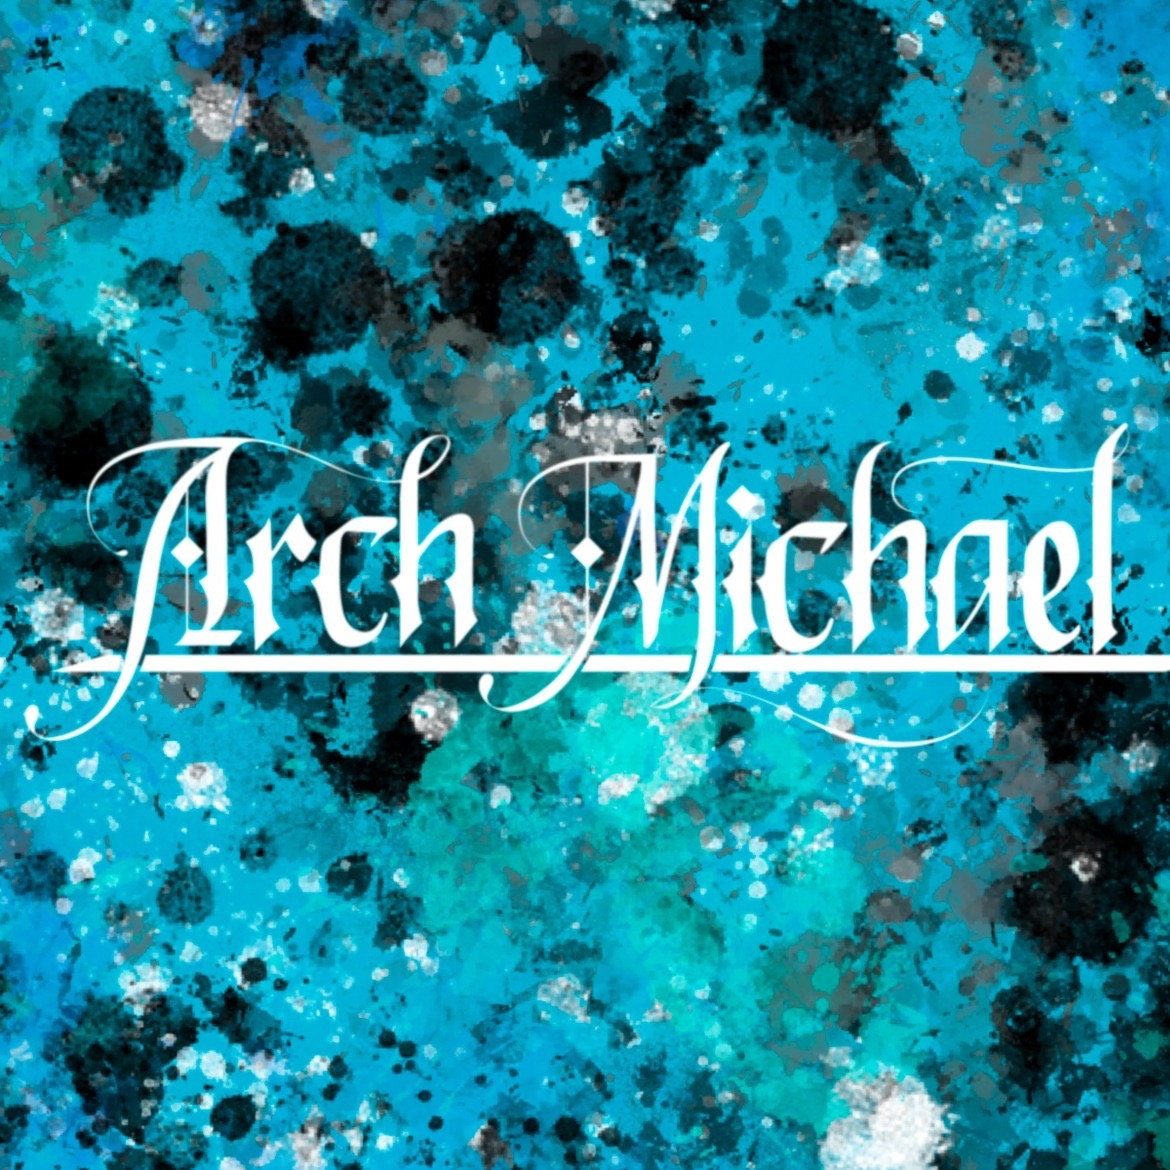 Arch Michael